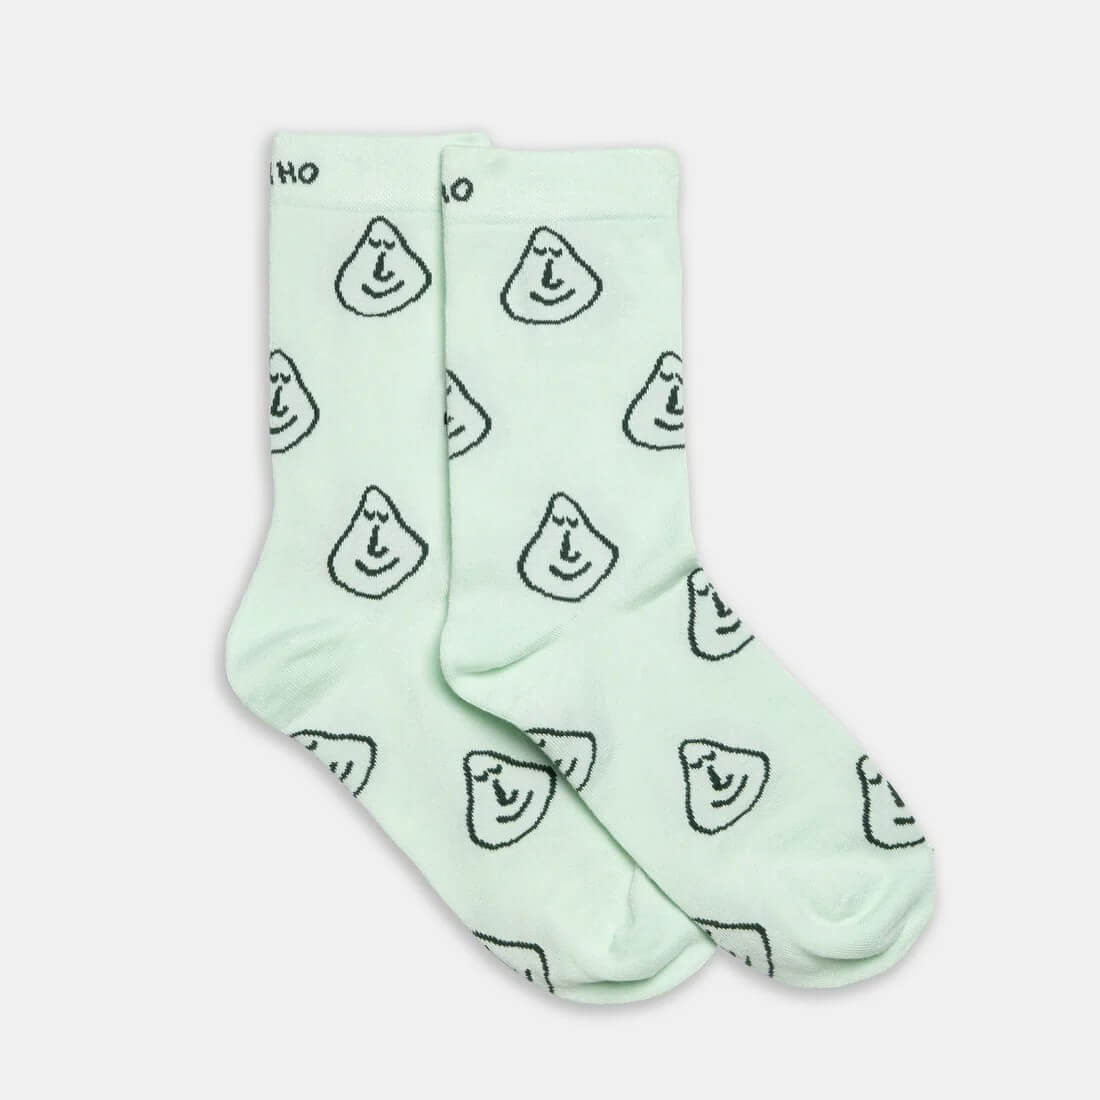 Leiho Socks Smiley Bamboo Socks - We're Mint To Be